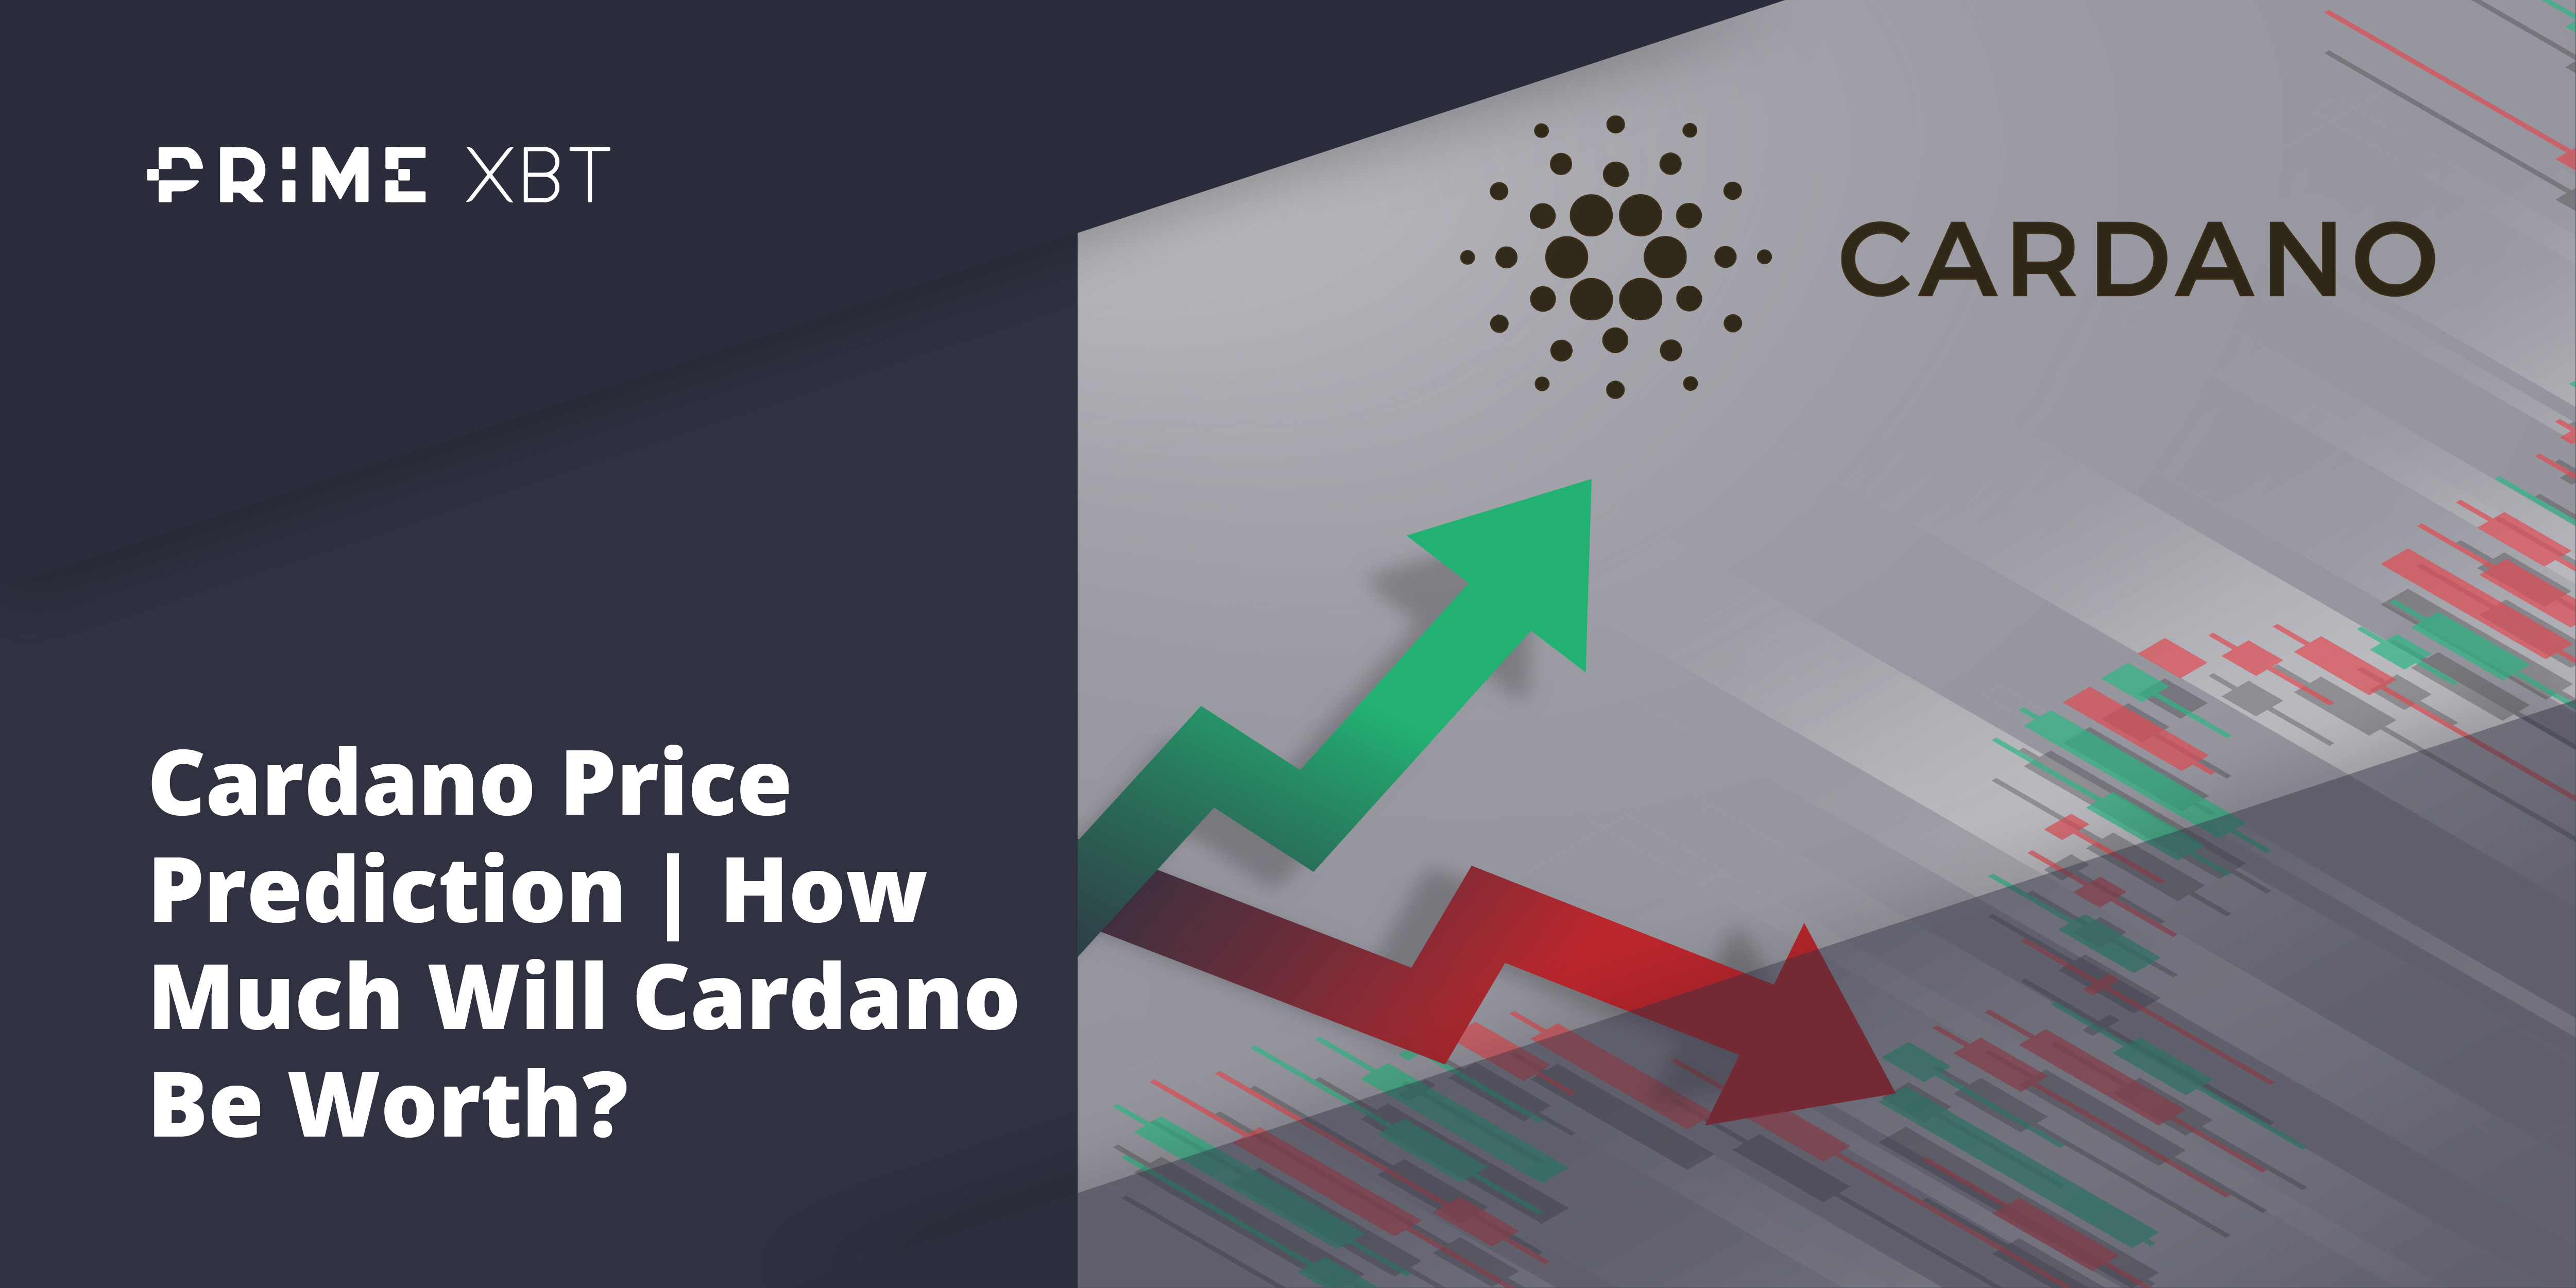 Cardano Price Prediction: What Price Will the Peer-Reviewed Crypto Reach? - cardano2